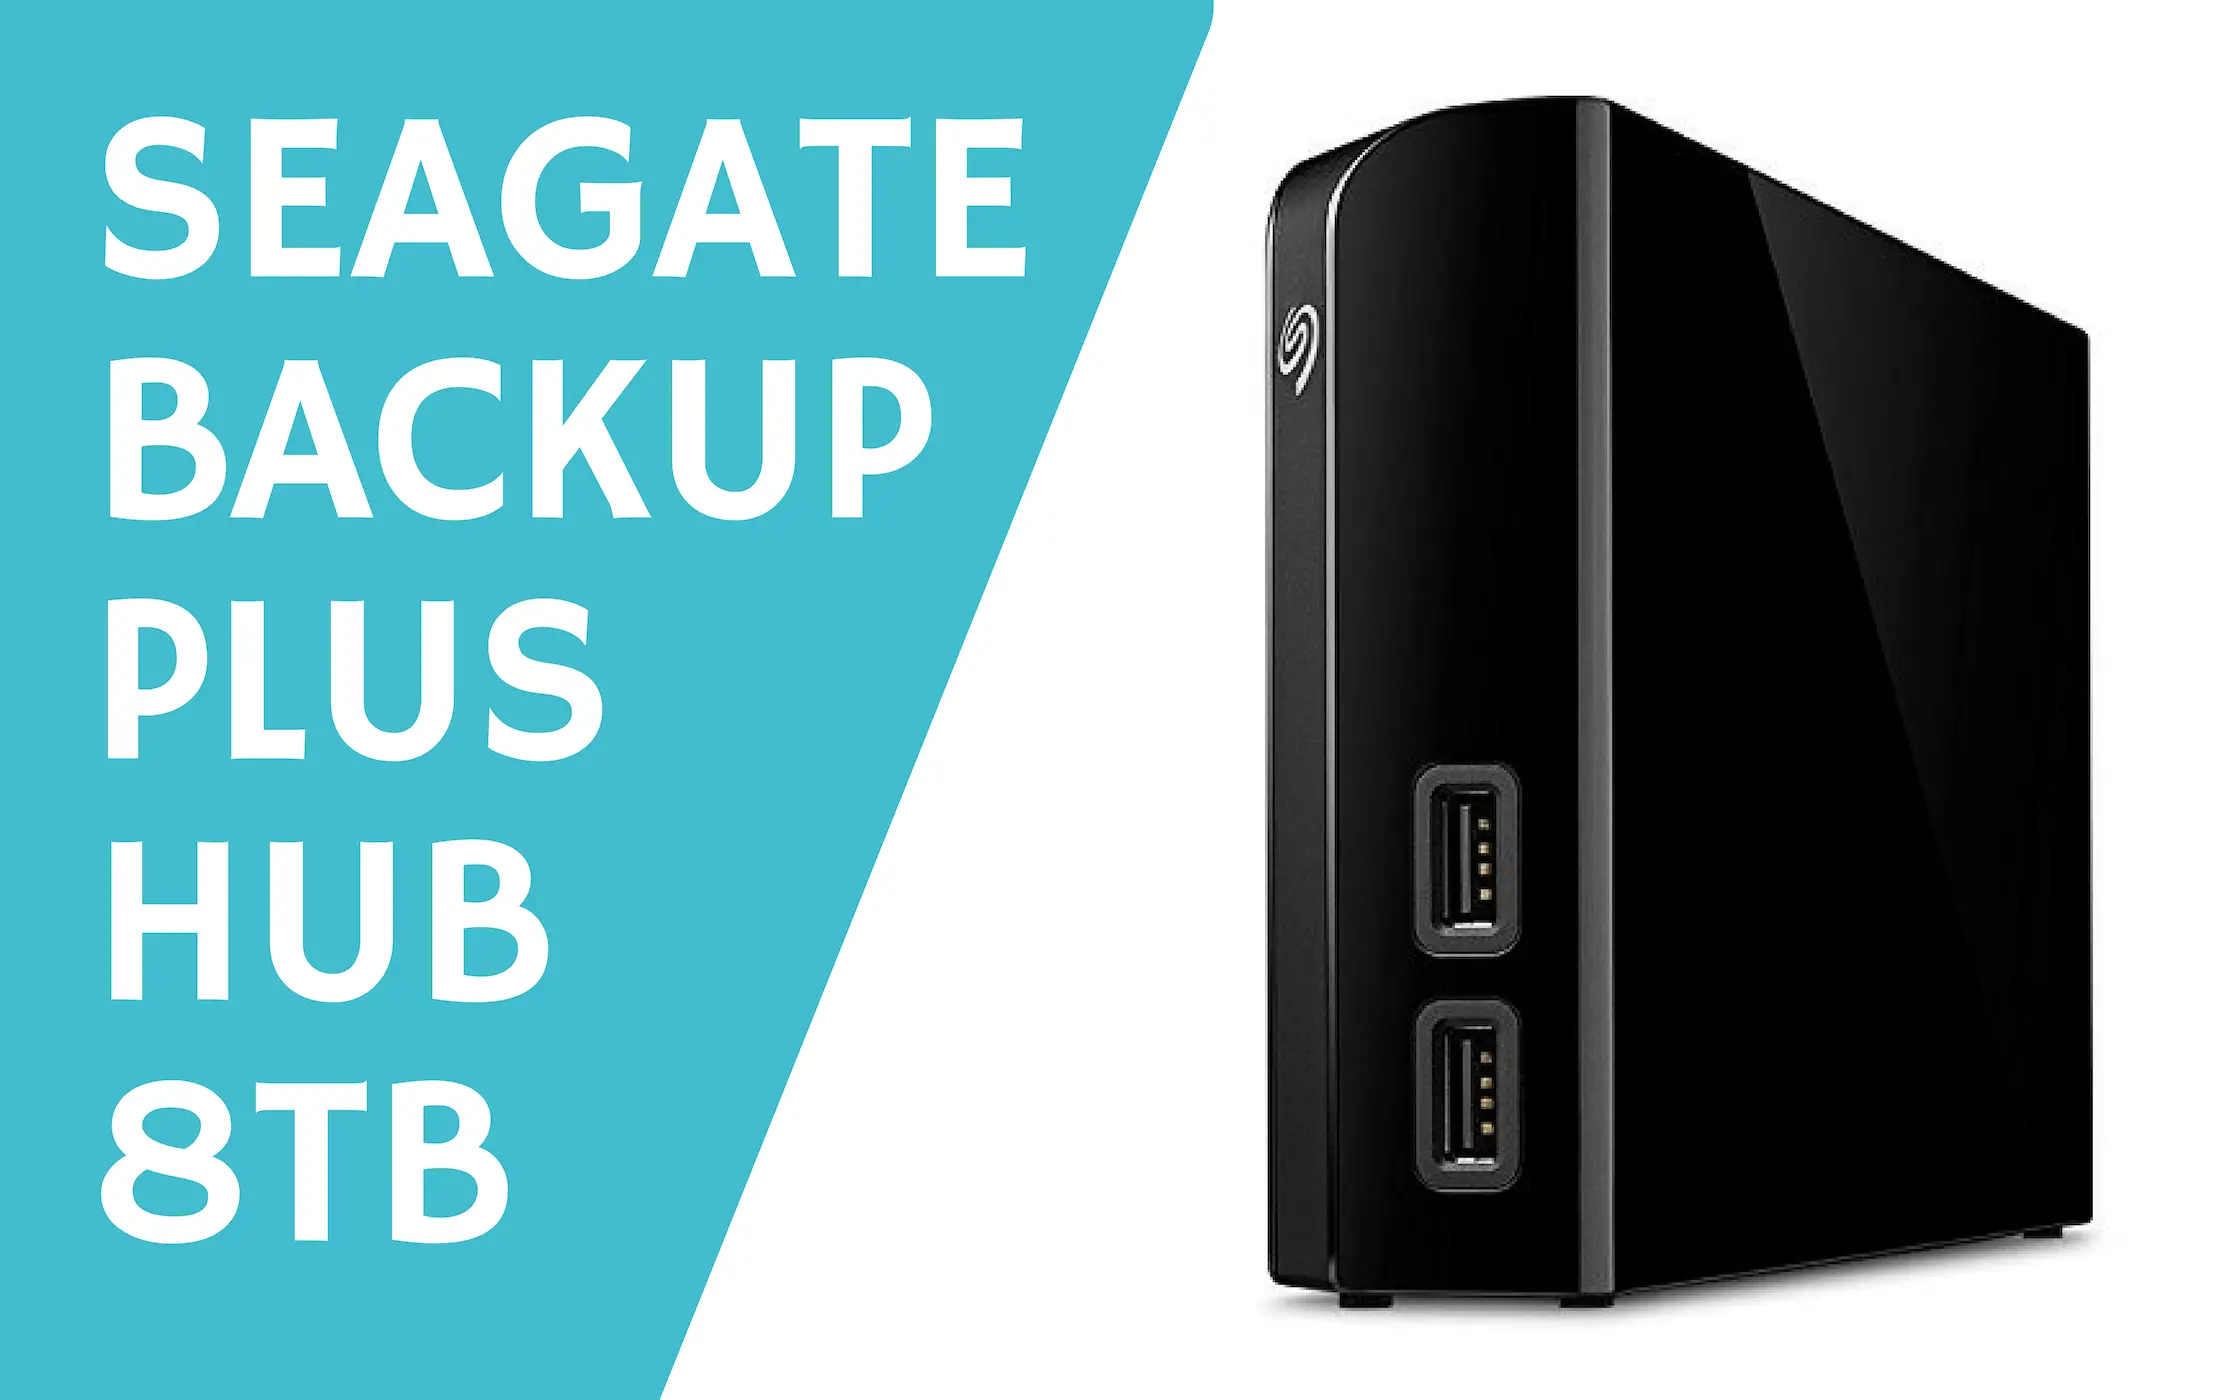 Seagate Backup Plus Hub 8TB External HDD review